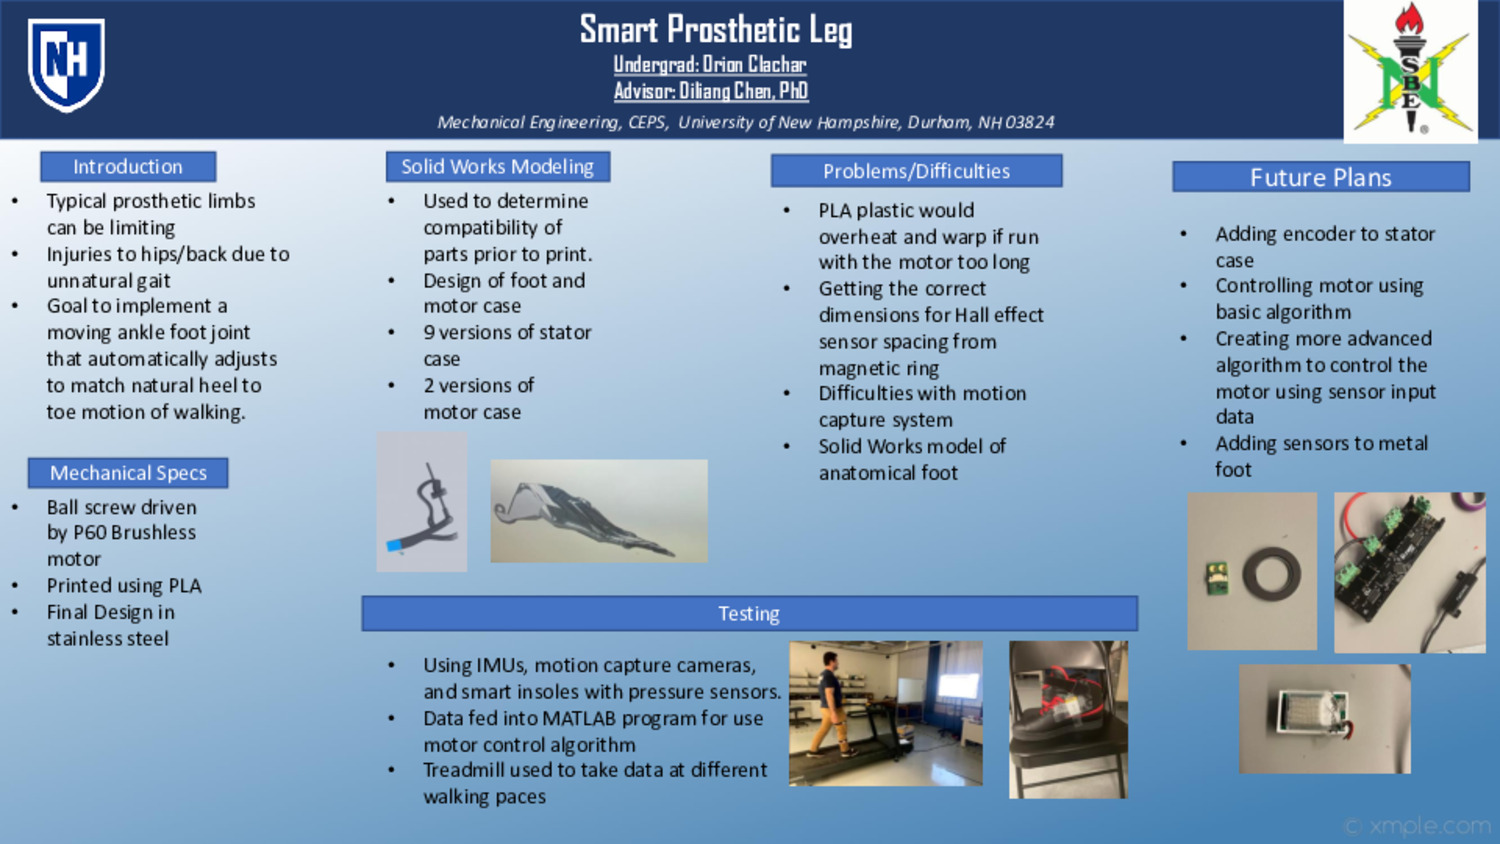 Smart Prosthetic Leg by ogc1009